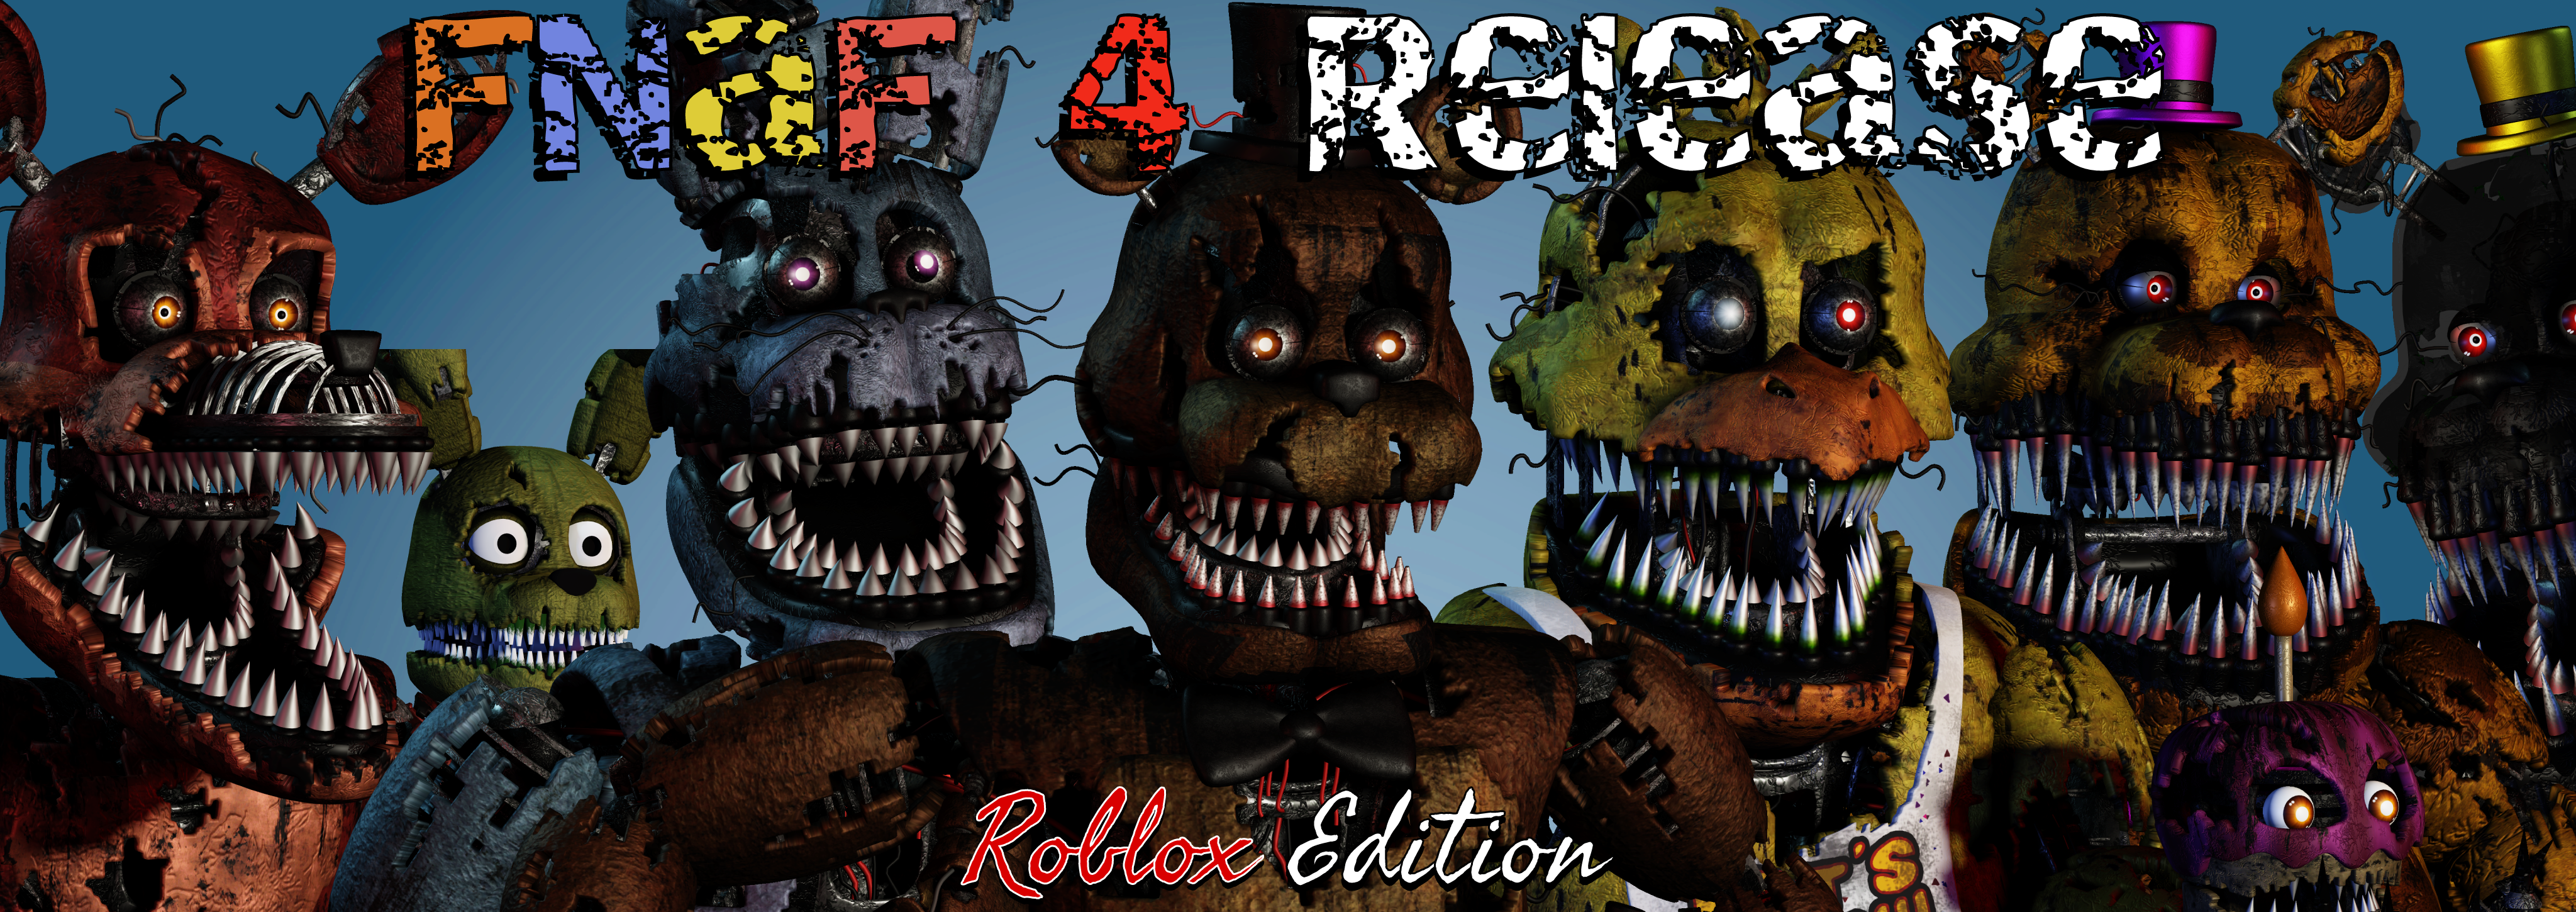 Nightmare Fredbear (FNaF 4 anniversary) : r/fivenightsatfreddys